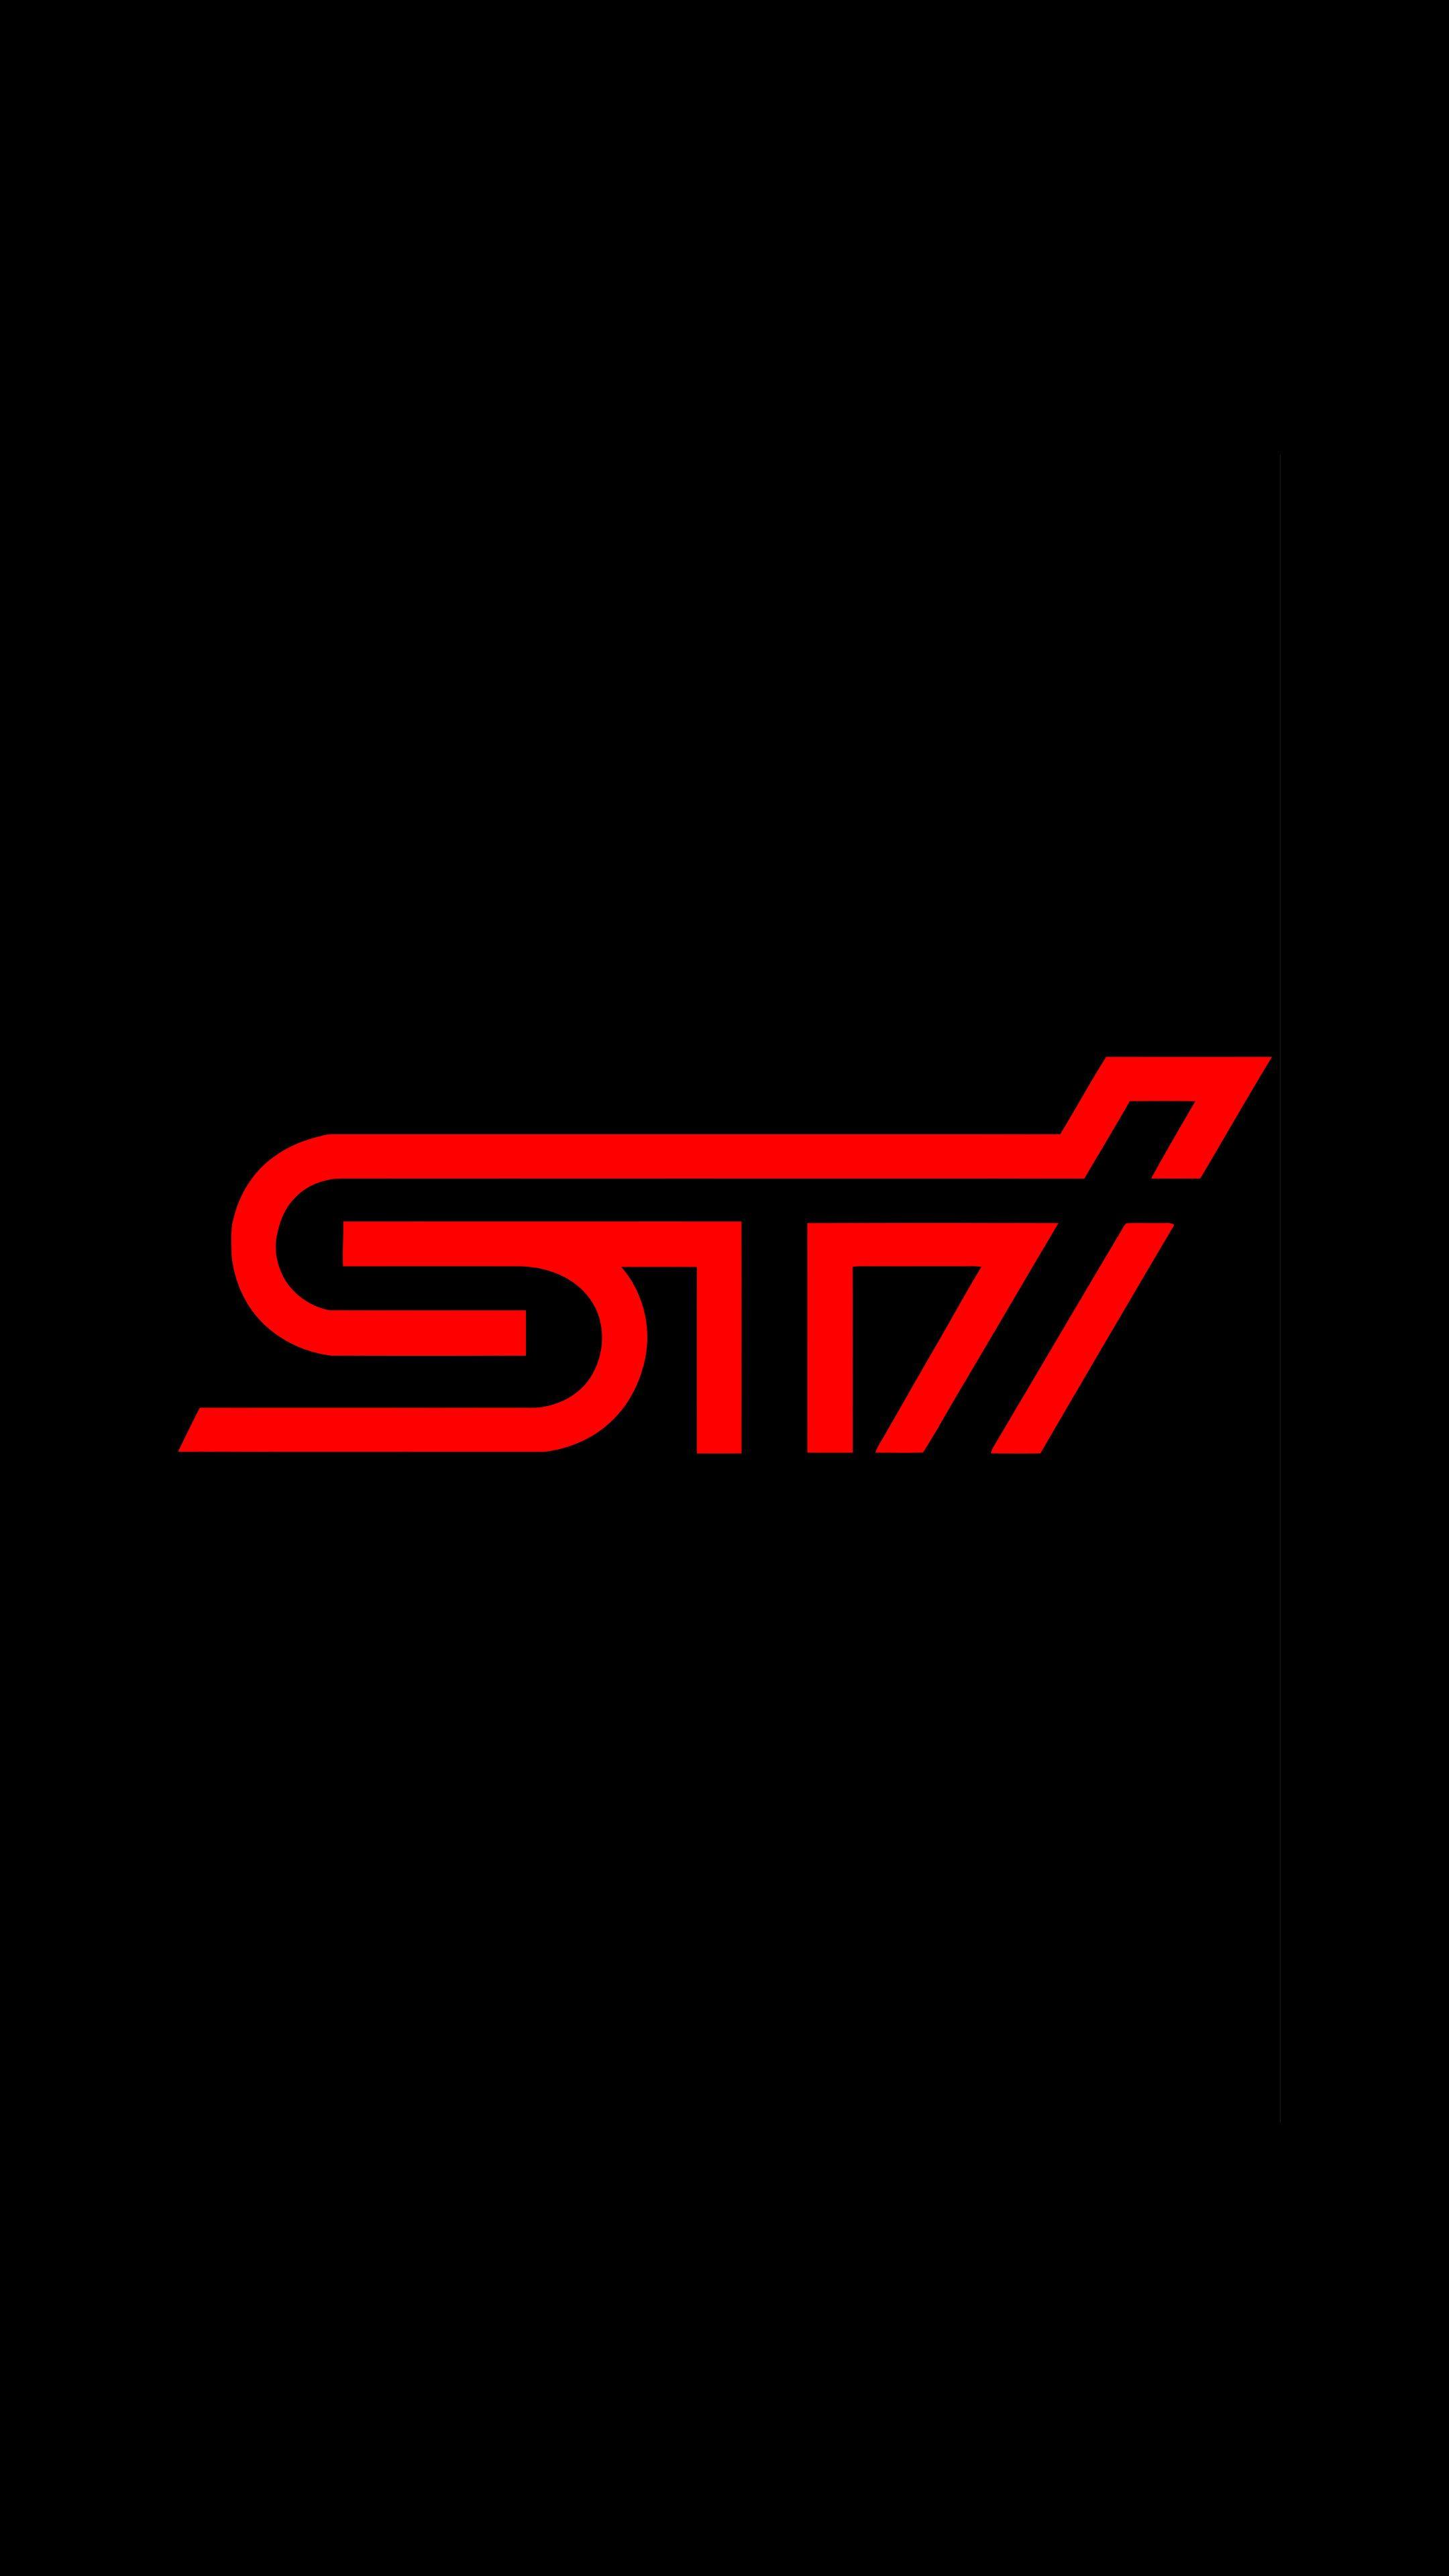 Sti Logo Wallpapers Top Free Sti Logo Backgrounds Wallpaperaccess